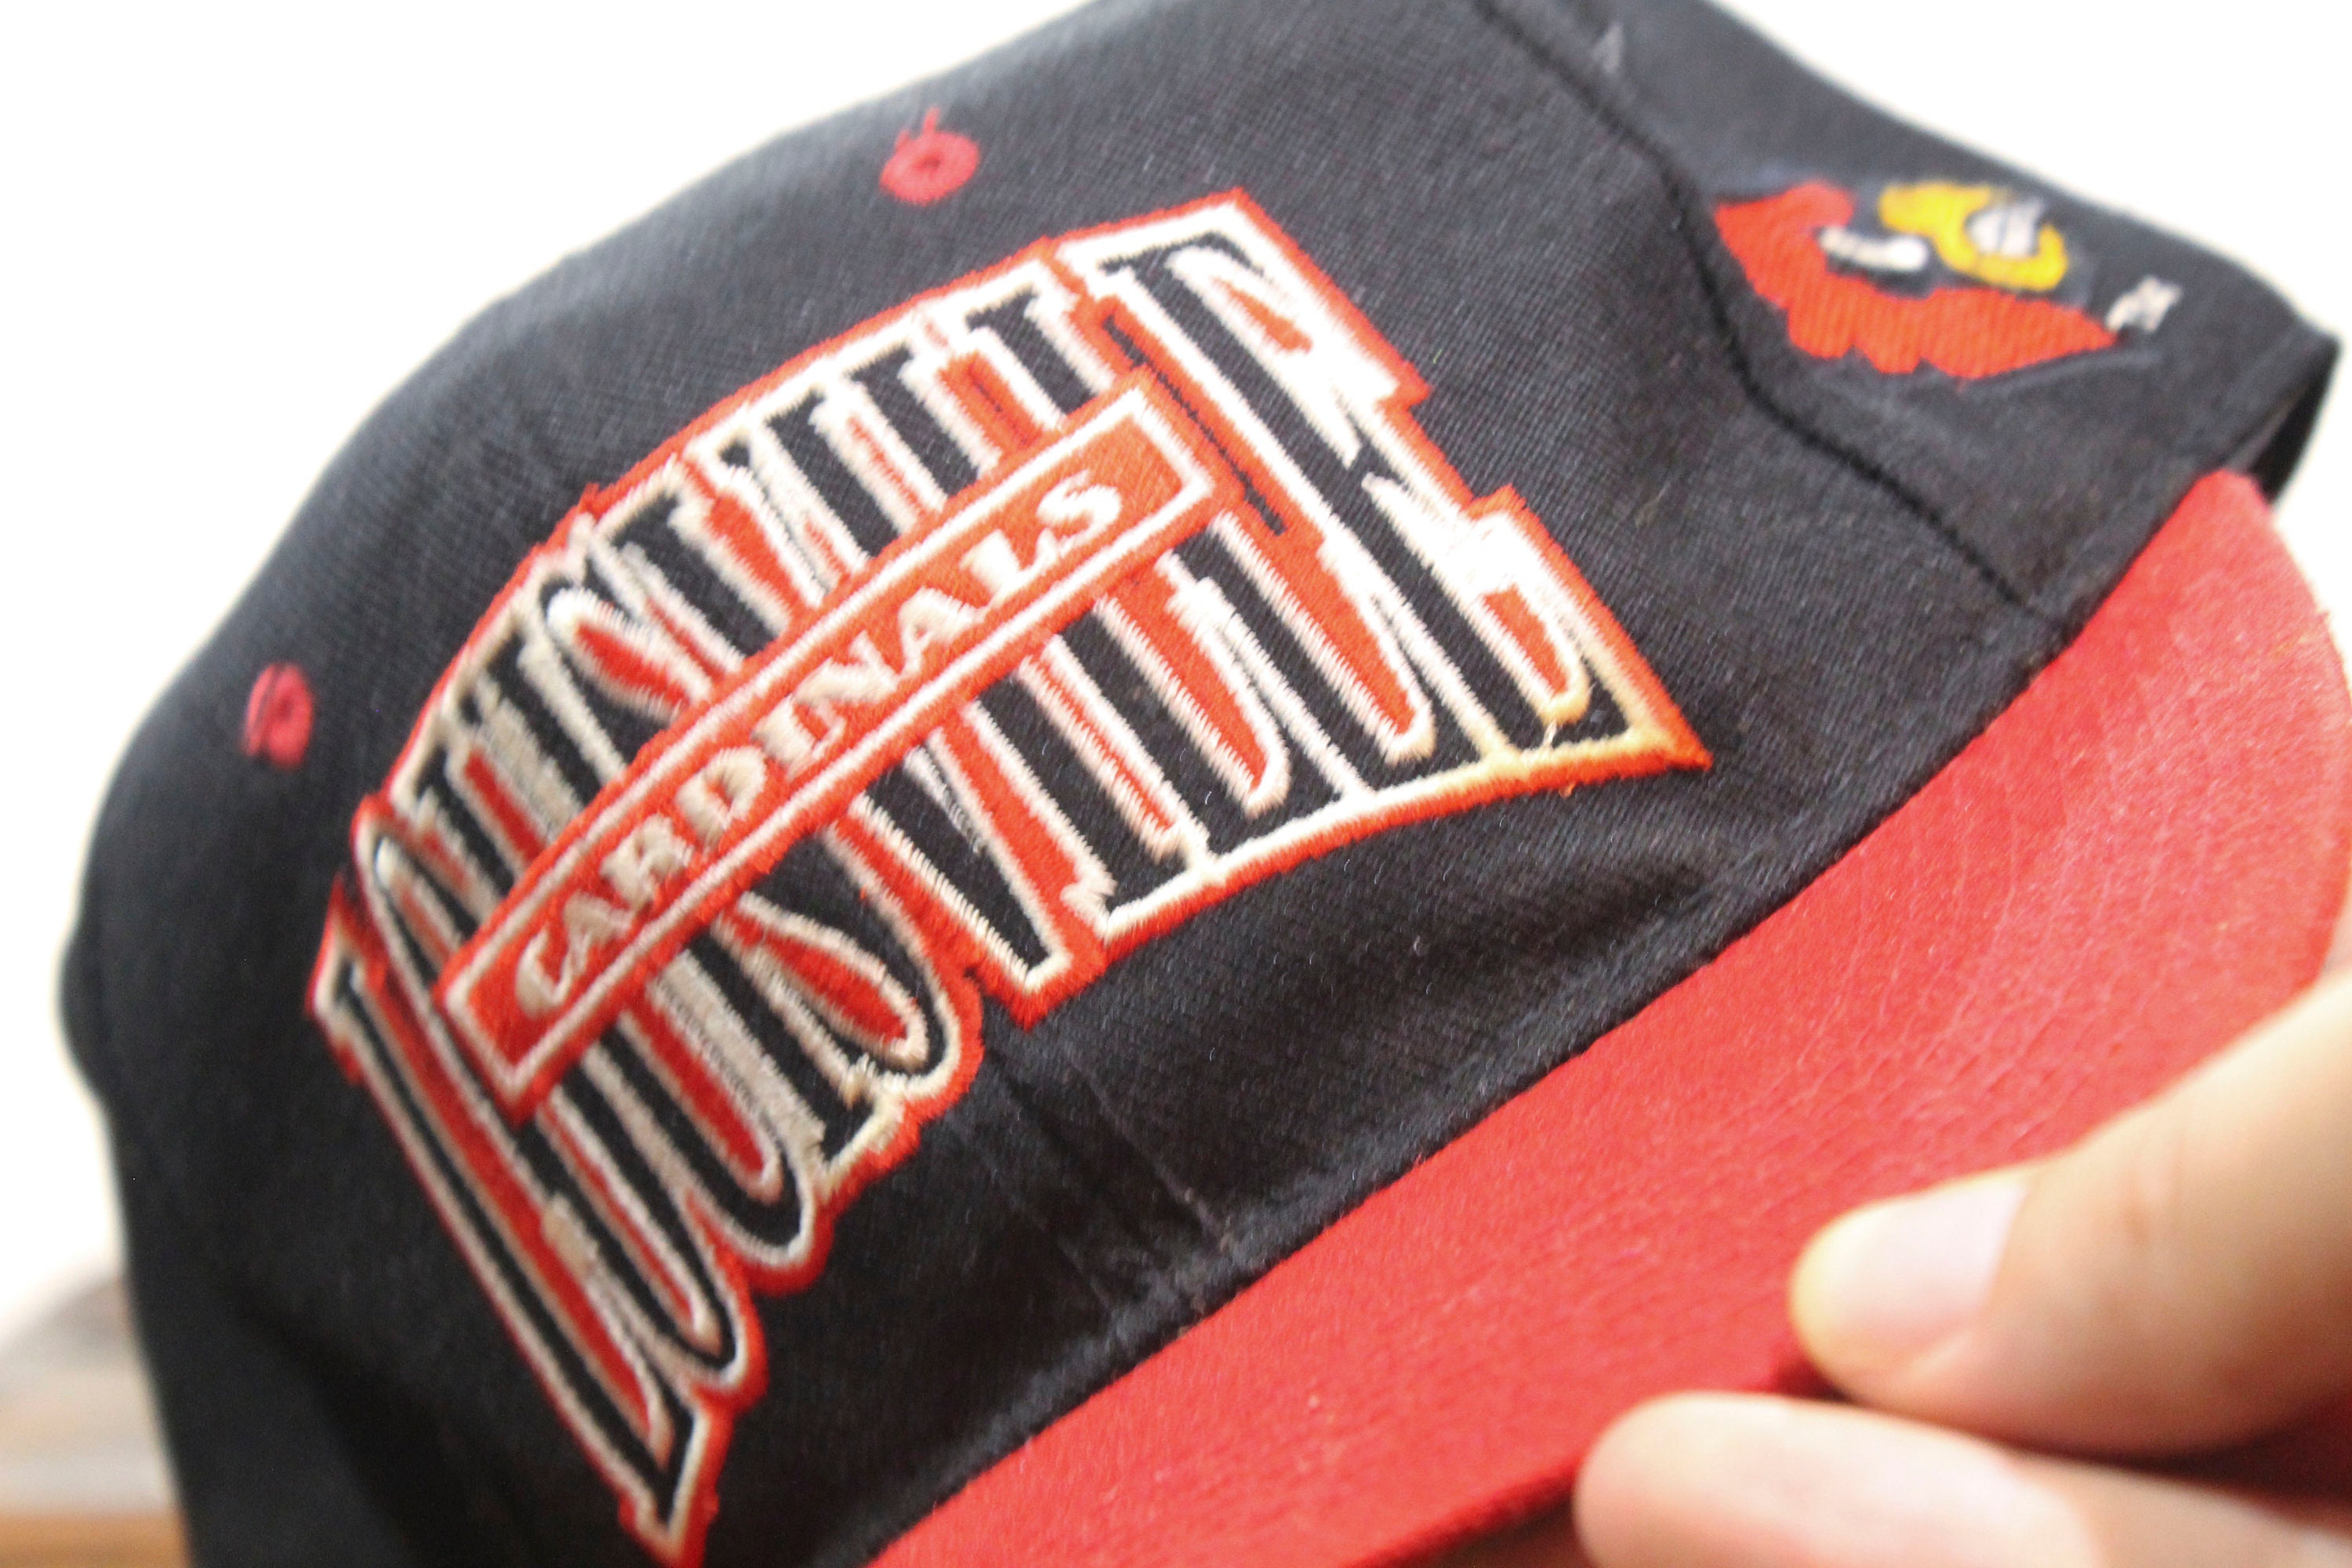 Vintage 90s University of Louisville Cardinals Cards School College Kentucky NCAA Wool Fitted Hat Baseball Cap 7 1/2